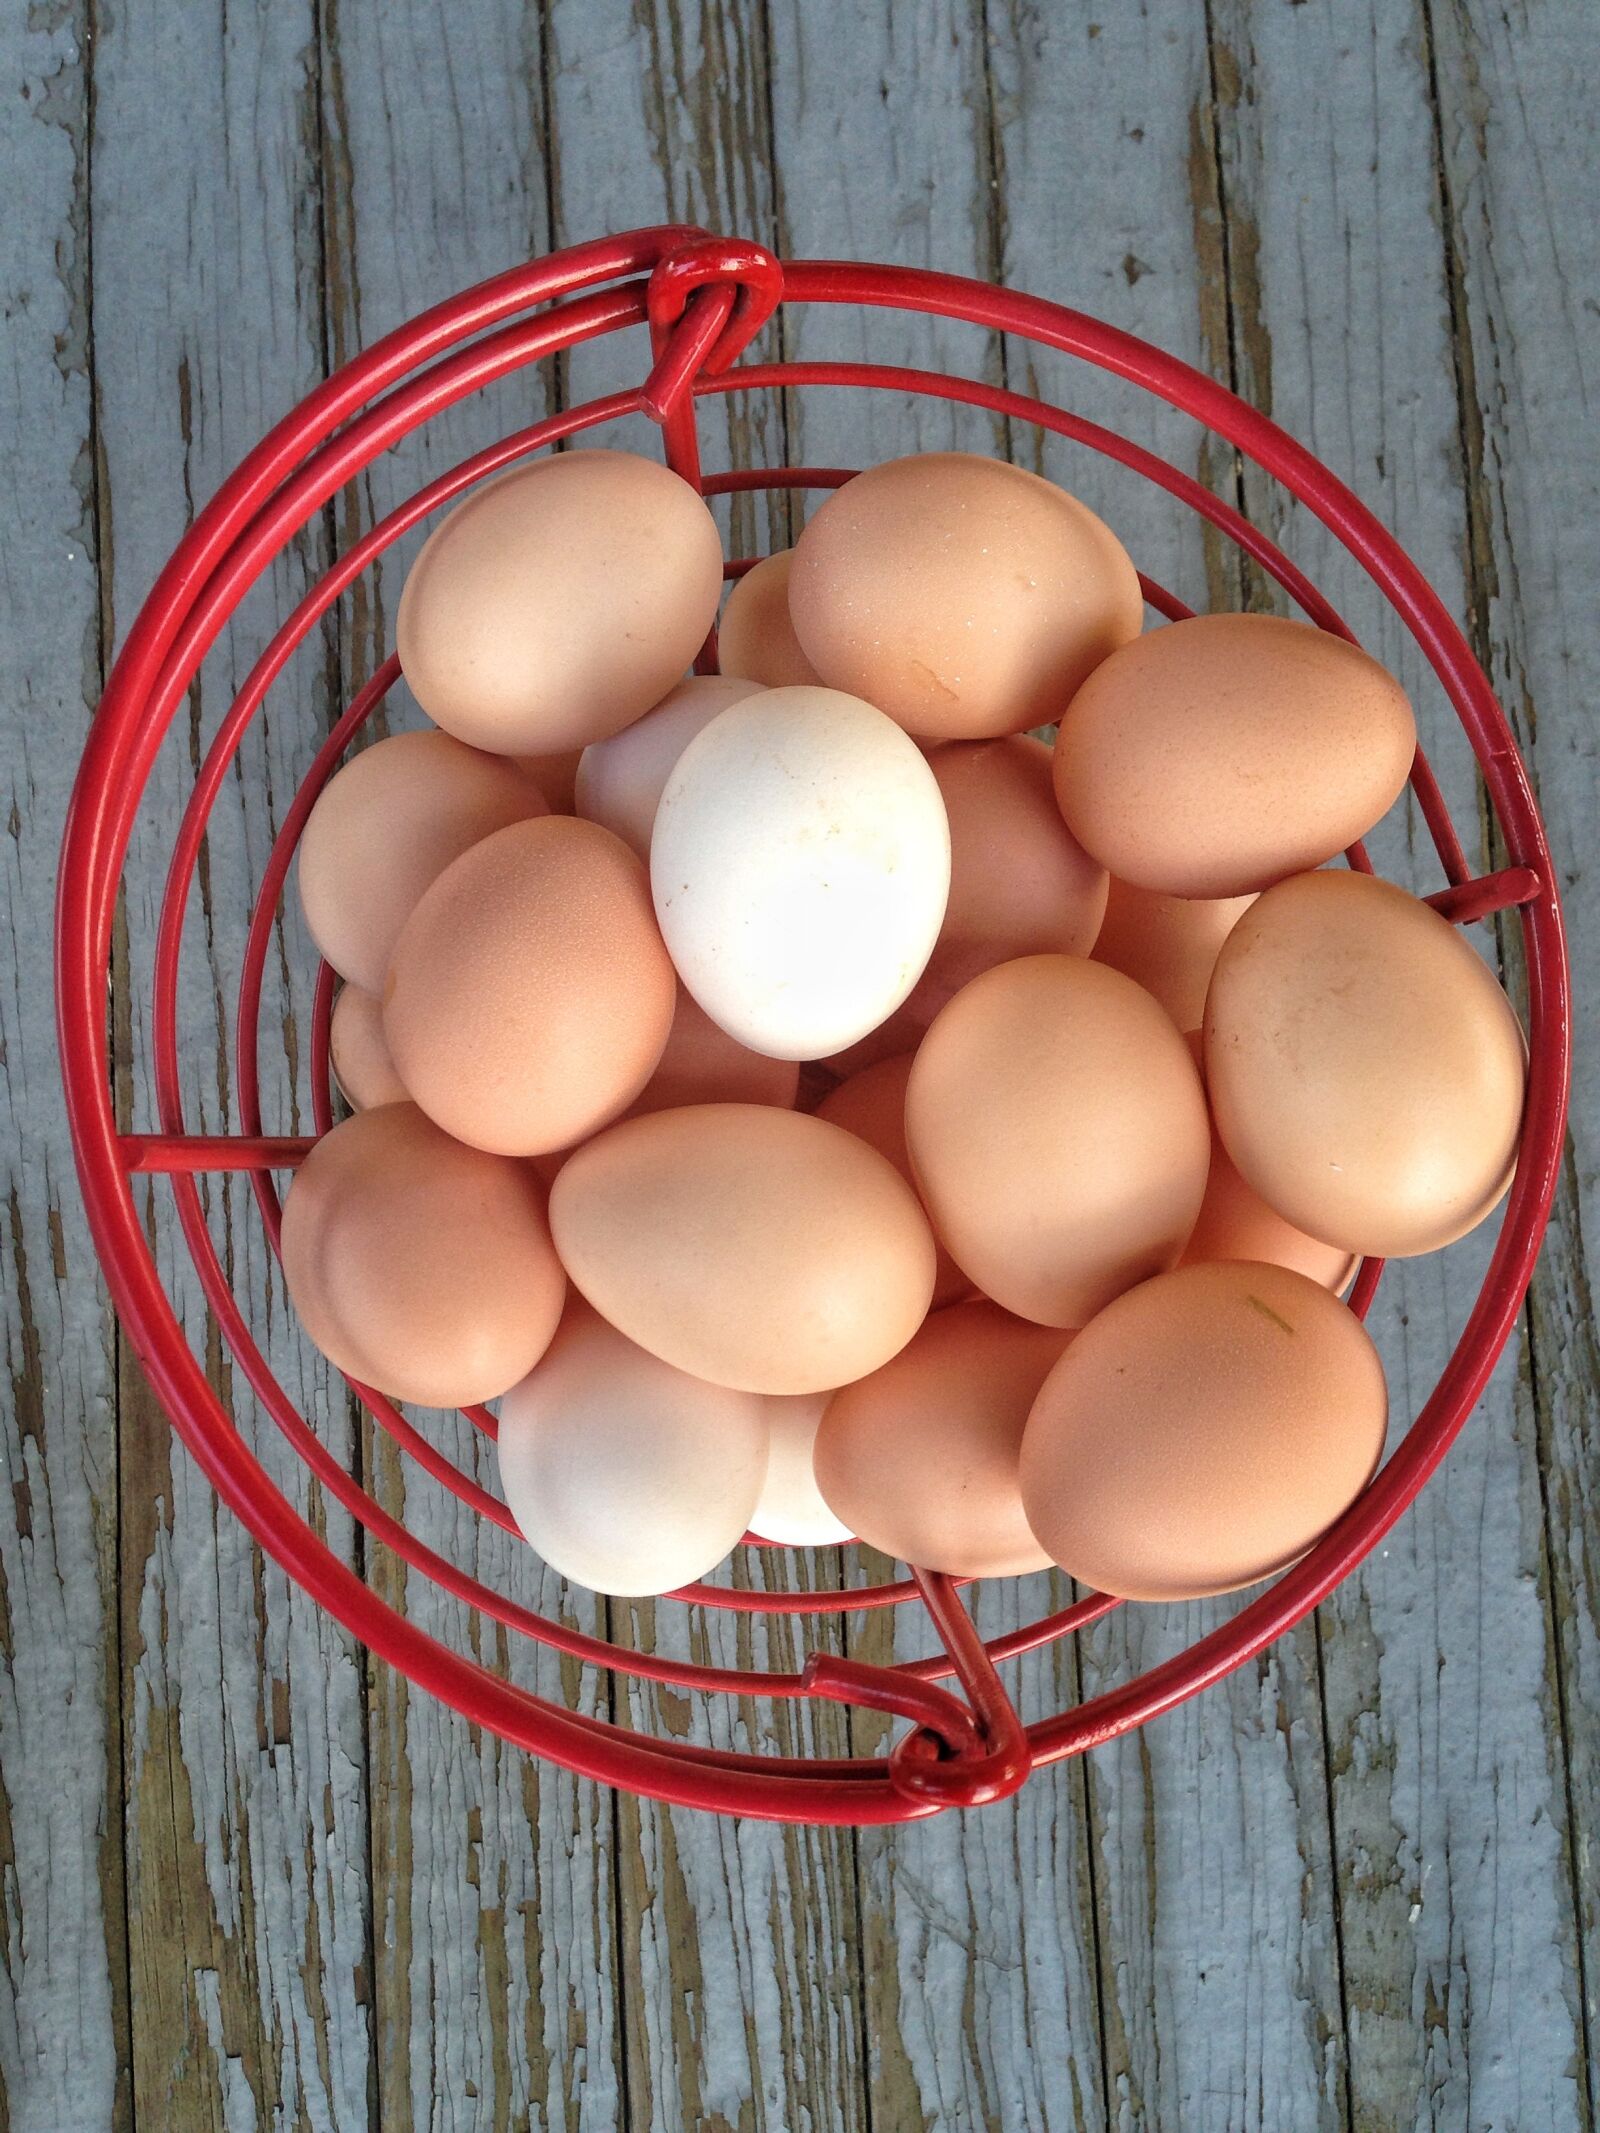 Apple iPhone 5c sample photo. Eggs, basket, wood photography